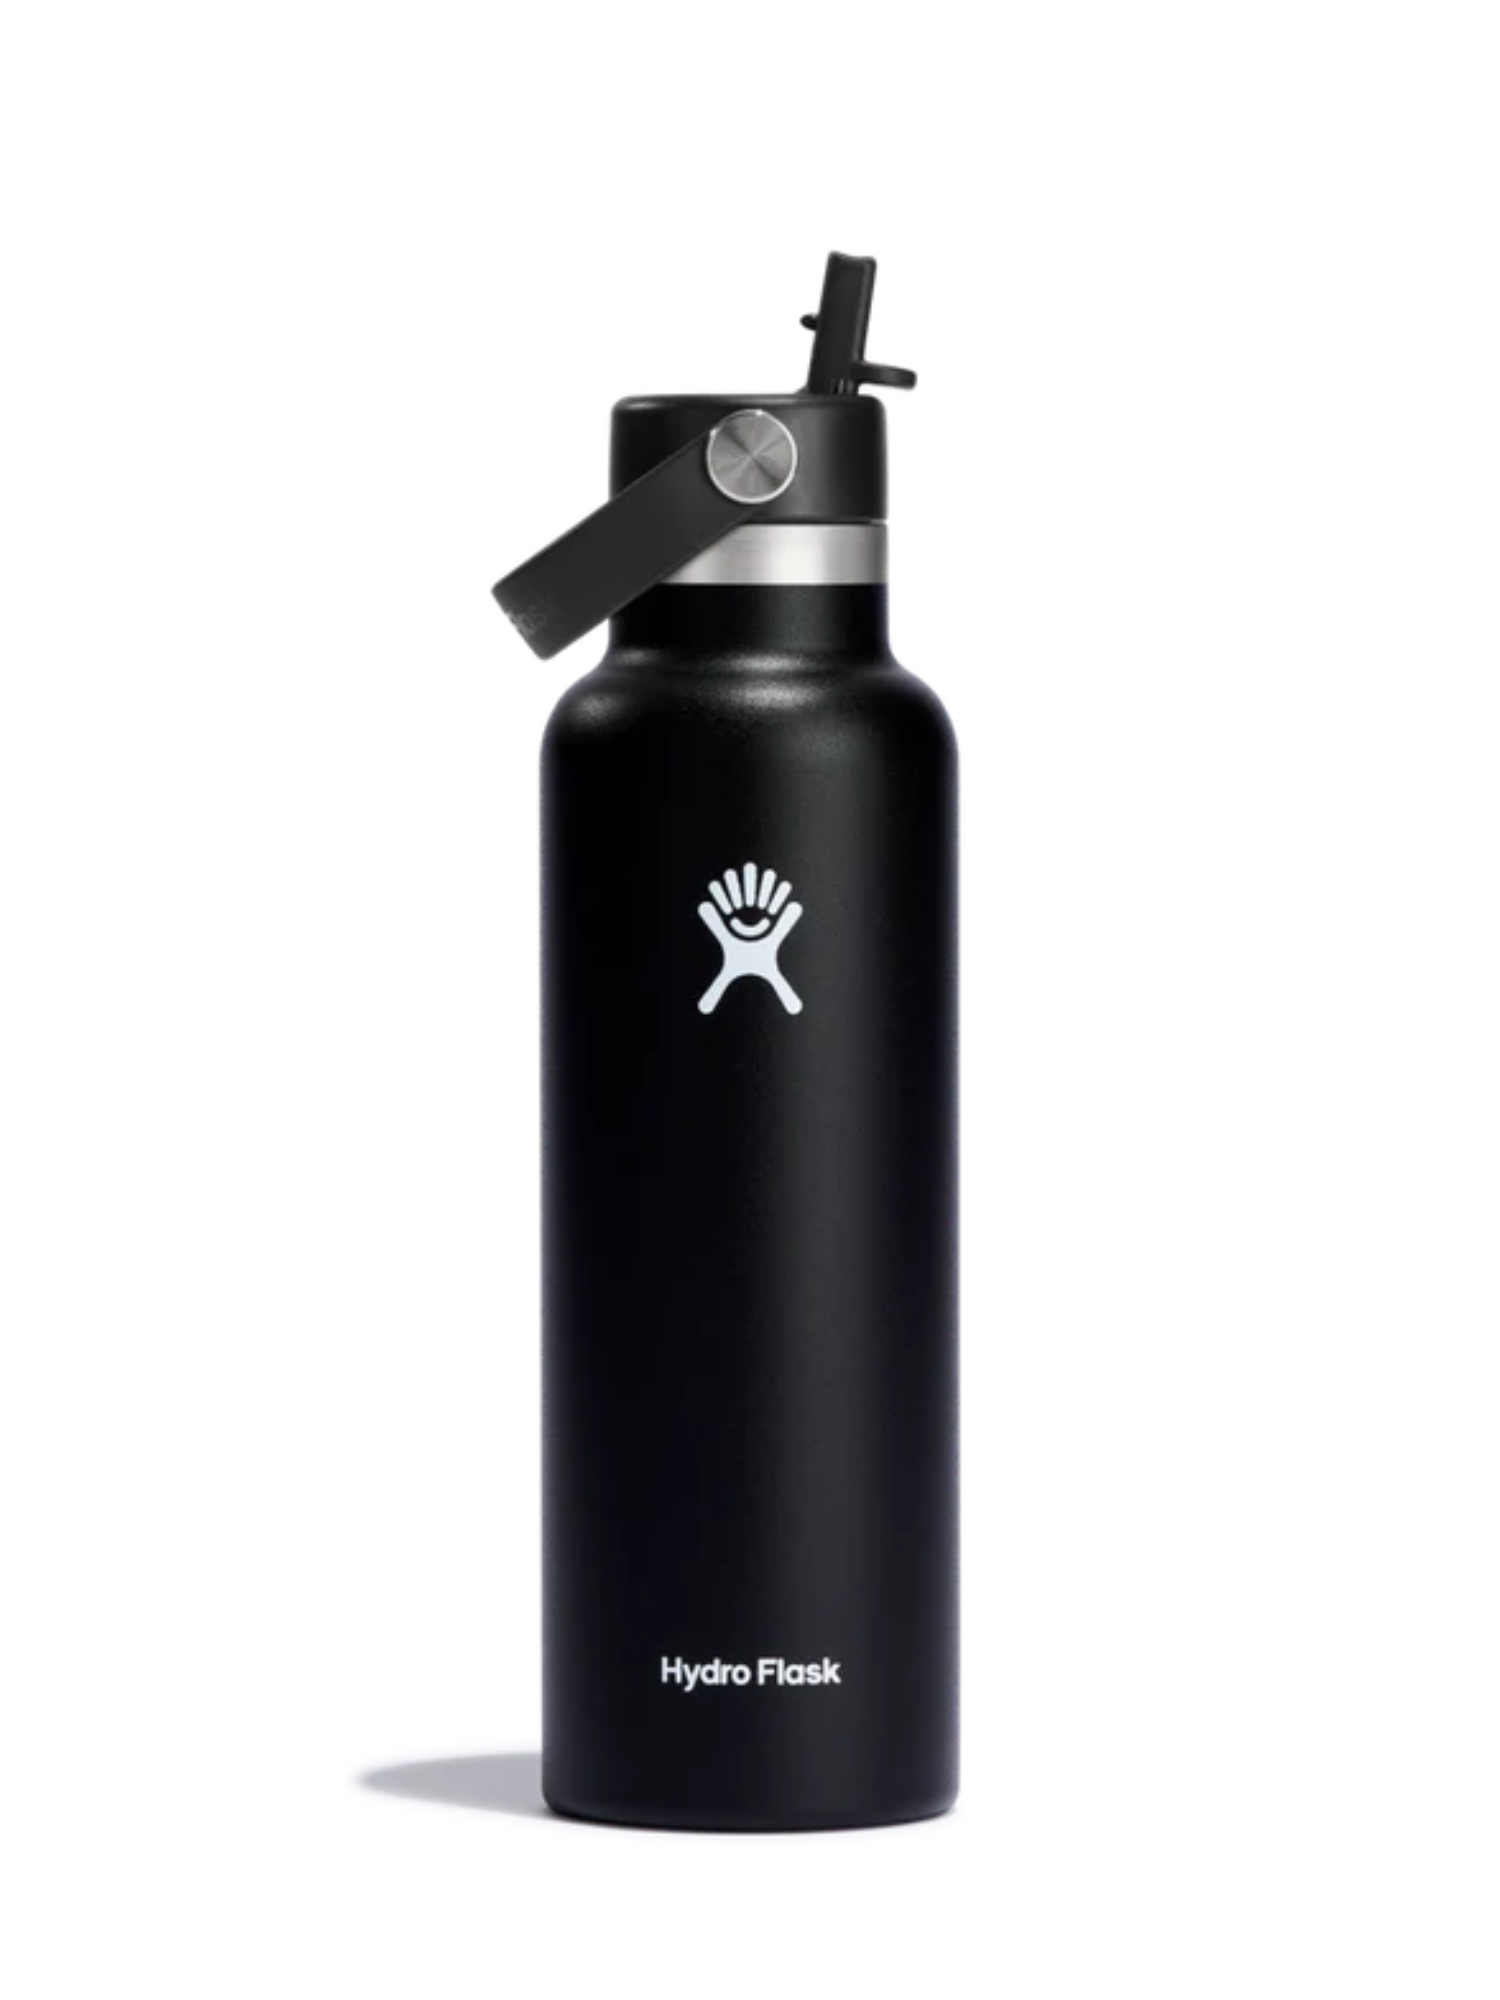 Hydroflask Bottle with Flex Straw Cap - Black